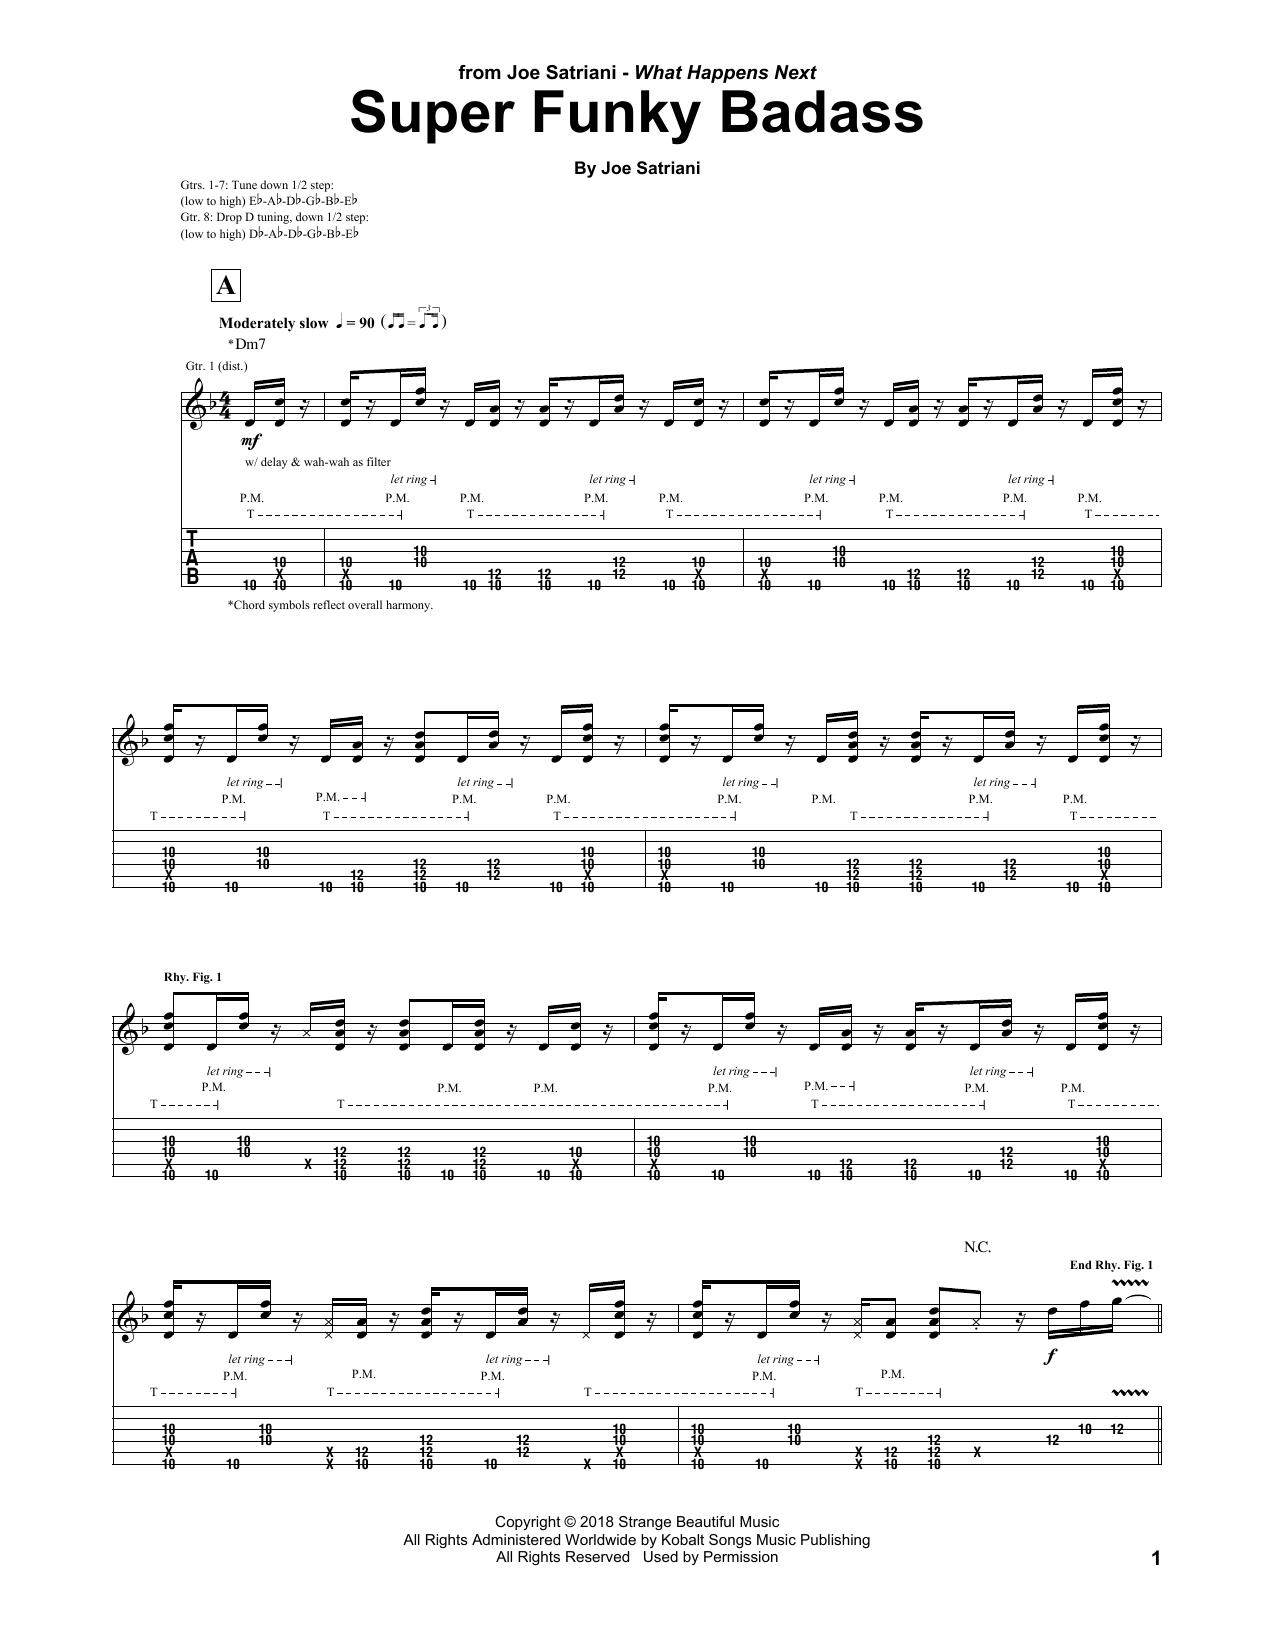 Joe Satriani Super Funky Badass Sheet Music Notes & Chords for Guitar Tab - Download or Print PDF